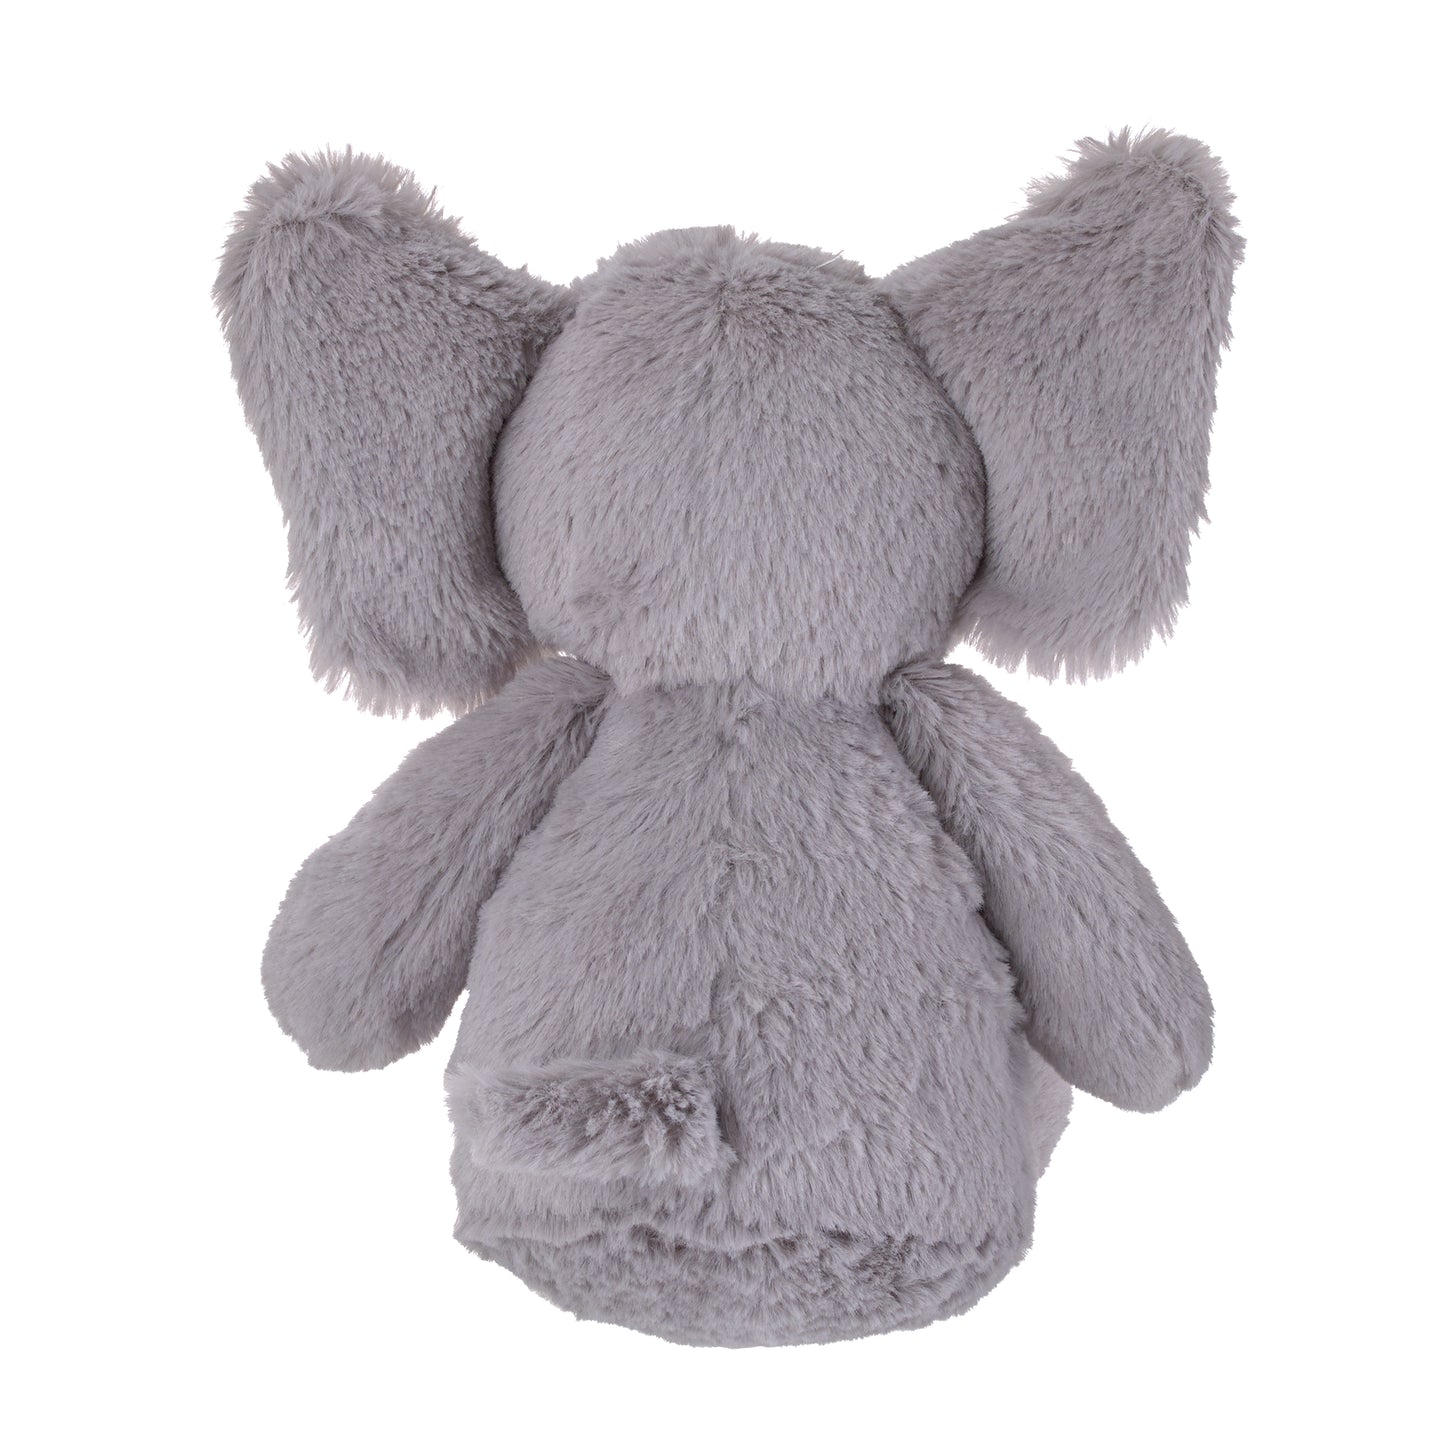 Carter's Blue Elephant - Gray Elephant Super Soft Plush Stuffed Animal